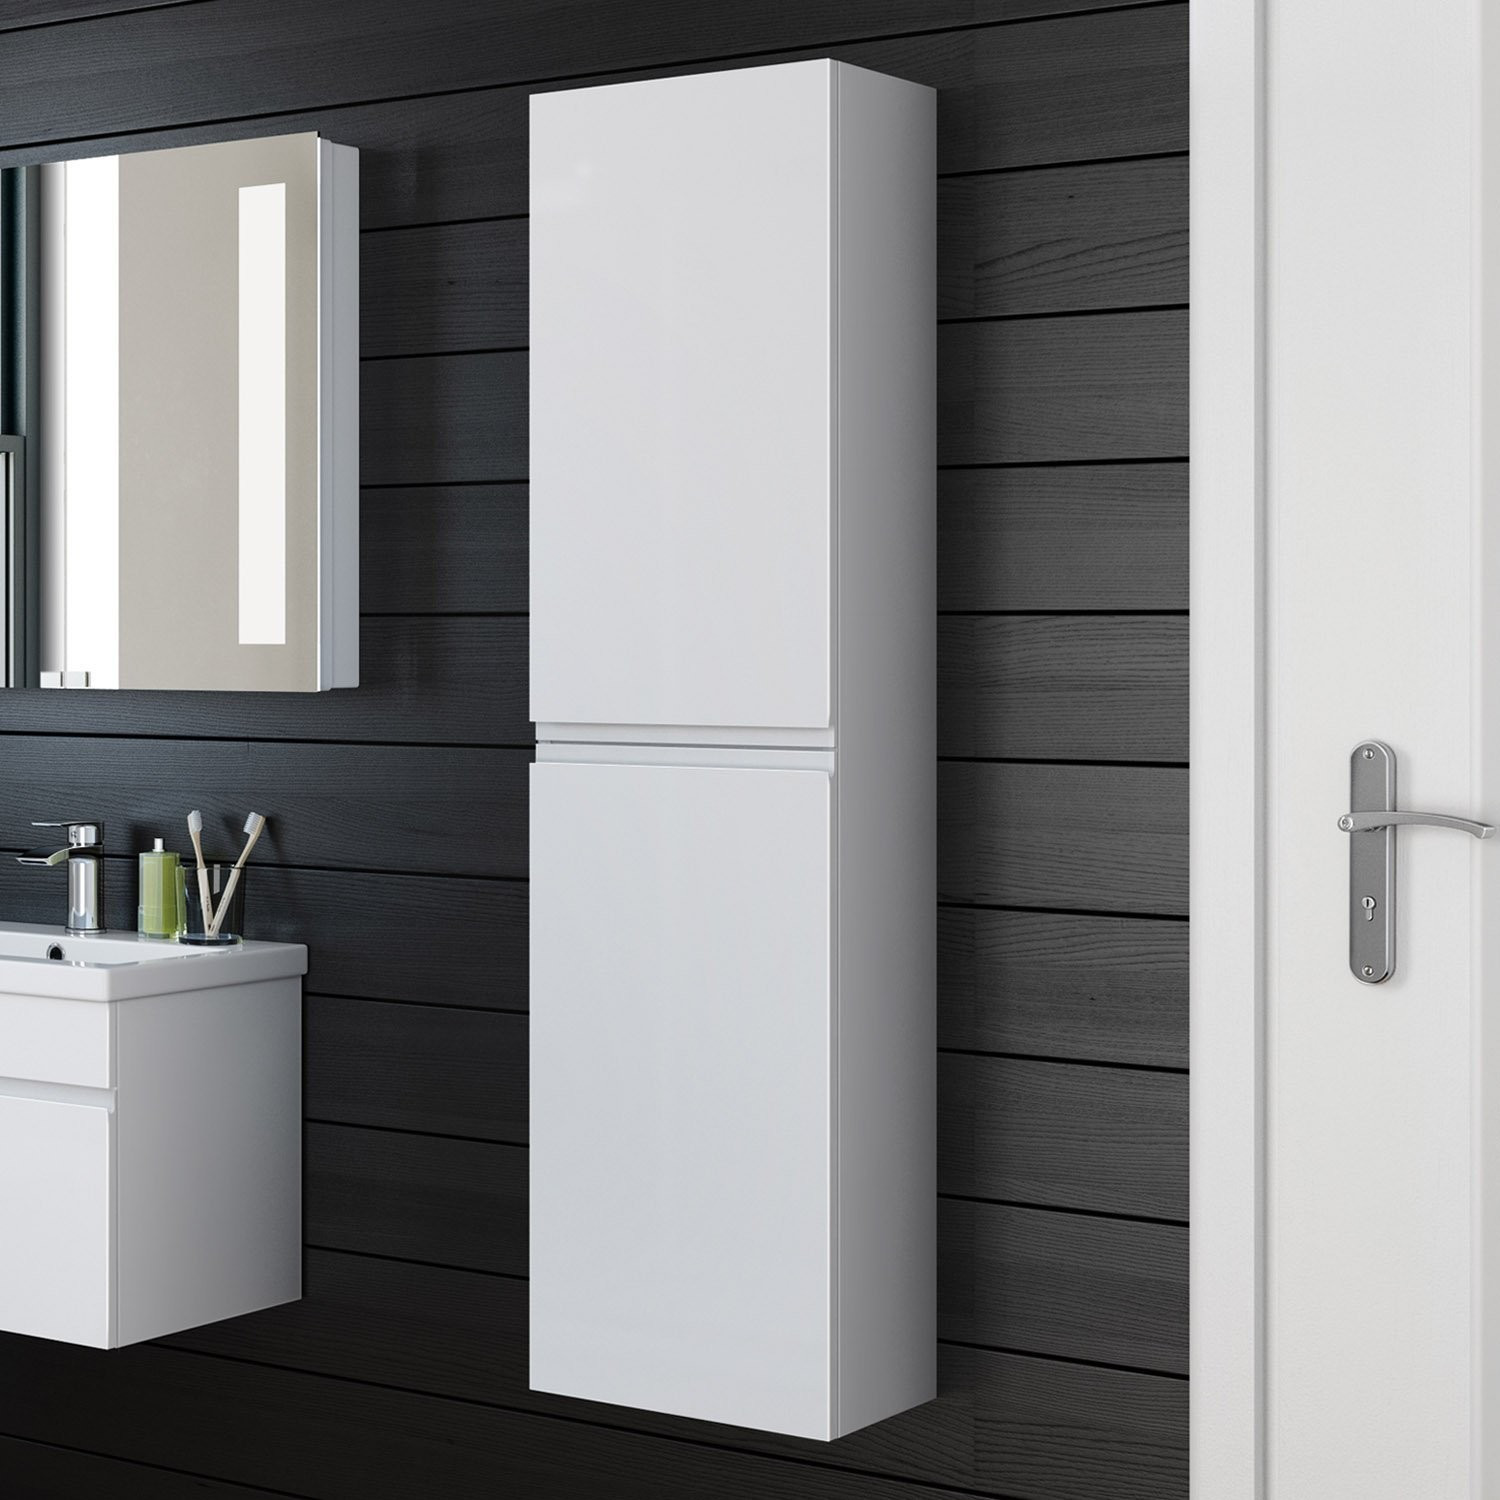 Best ideas about Small Bathroom Storage Cabinets
. Save or Pin Stunning Bathroom Storage Cabinets Uk dkbzaWeb Now.